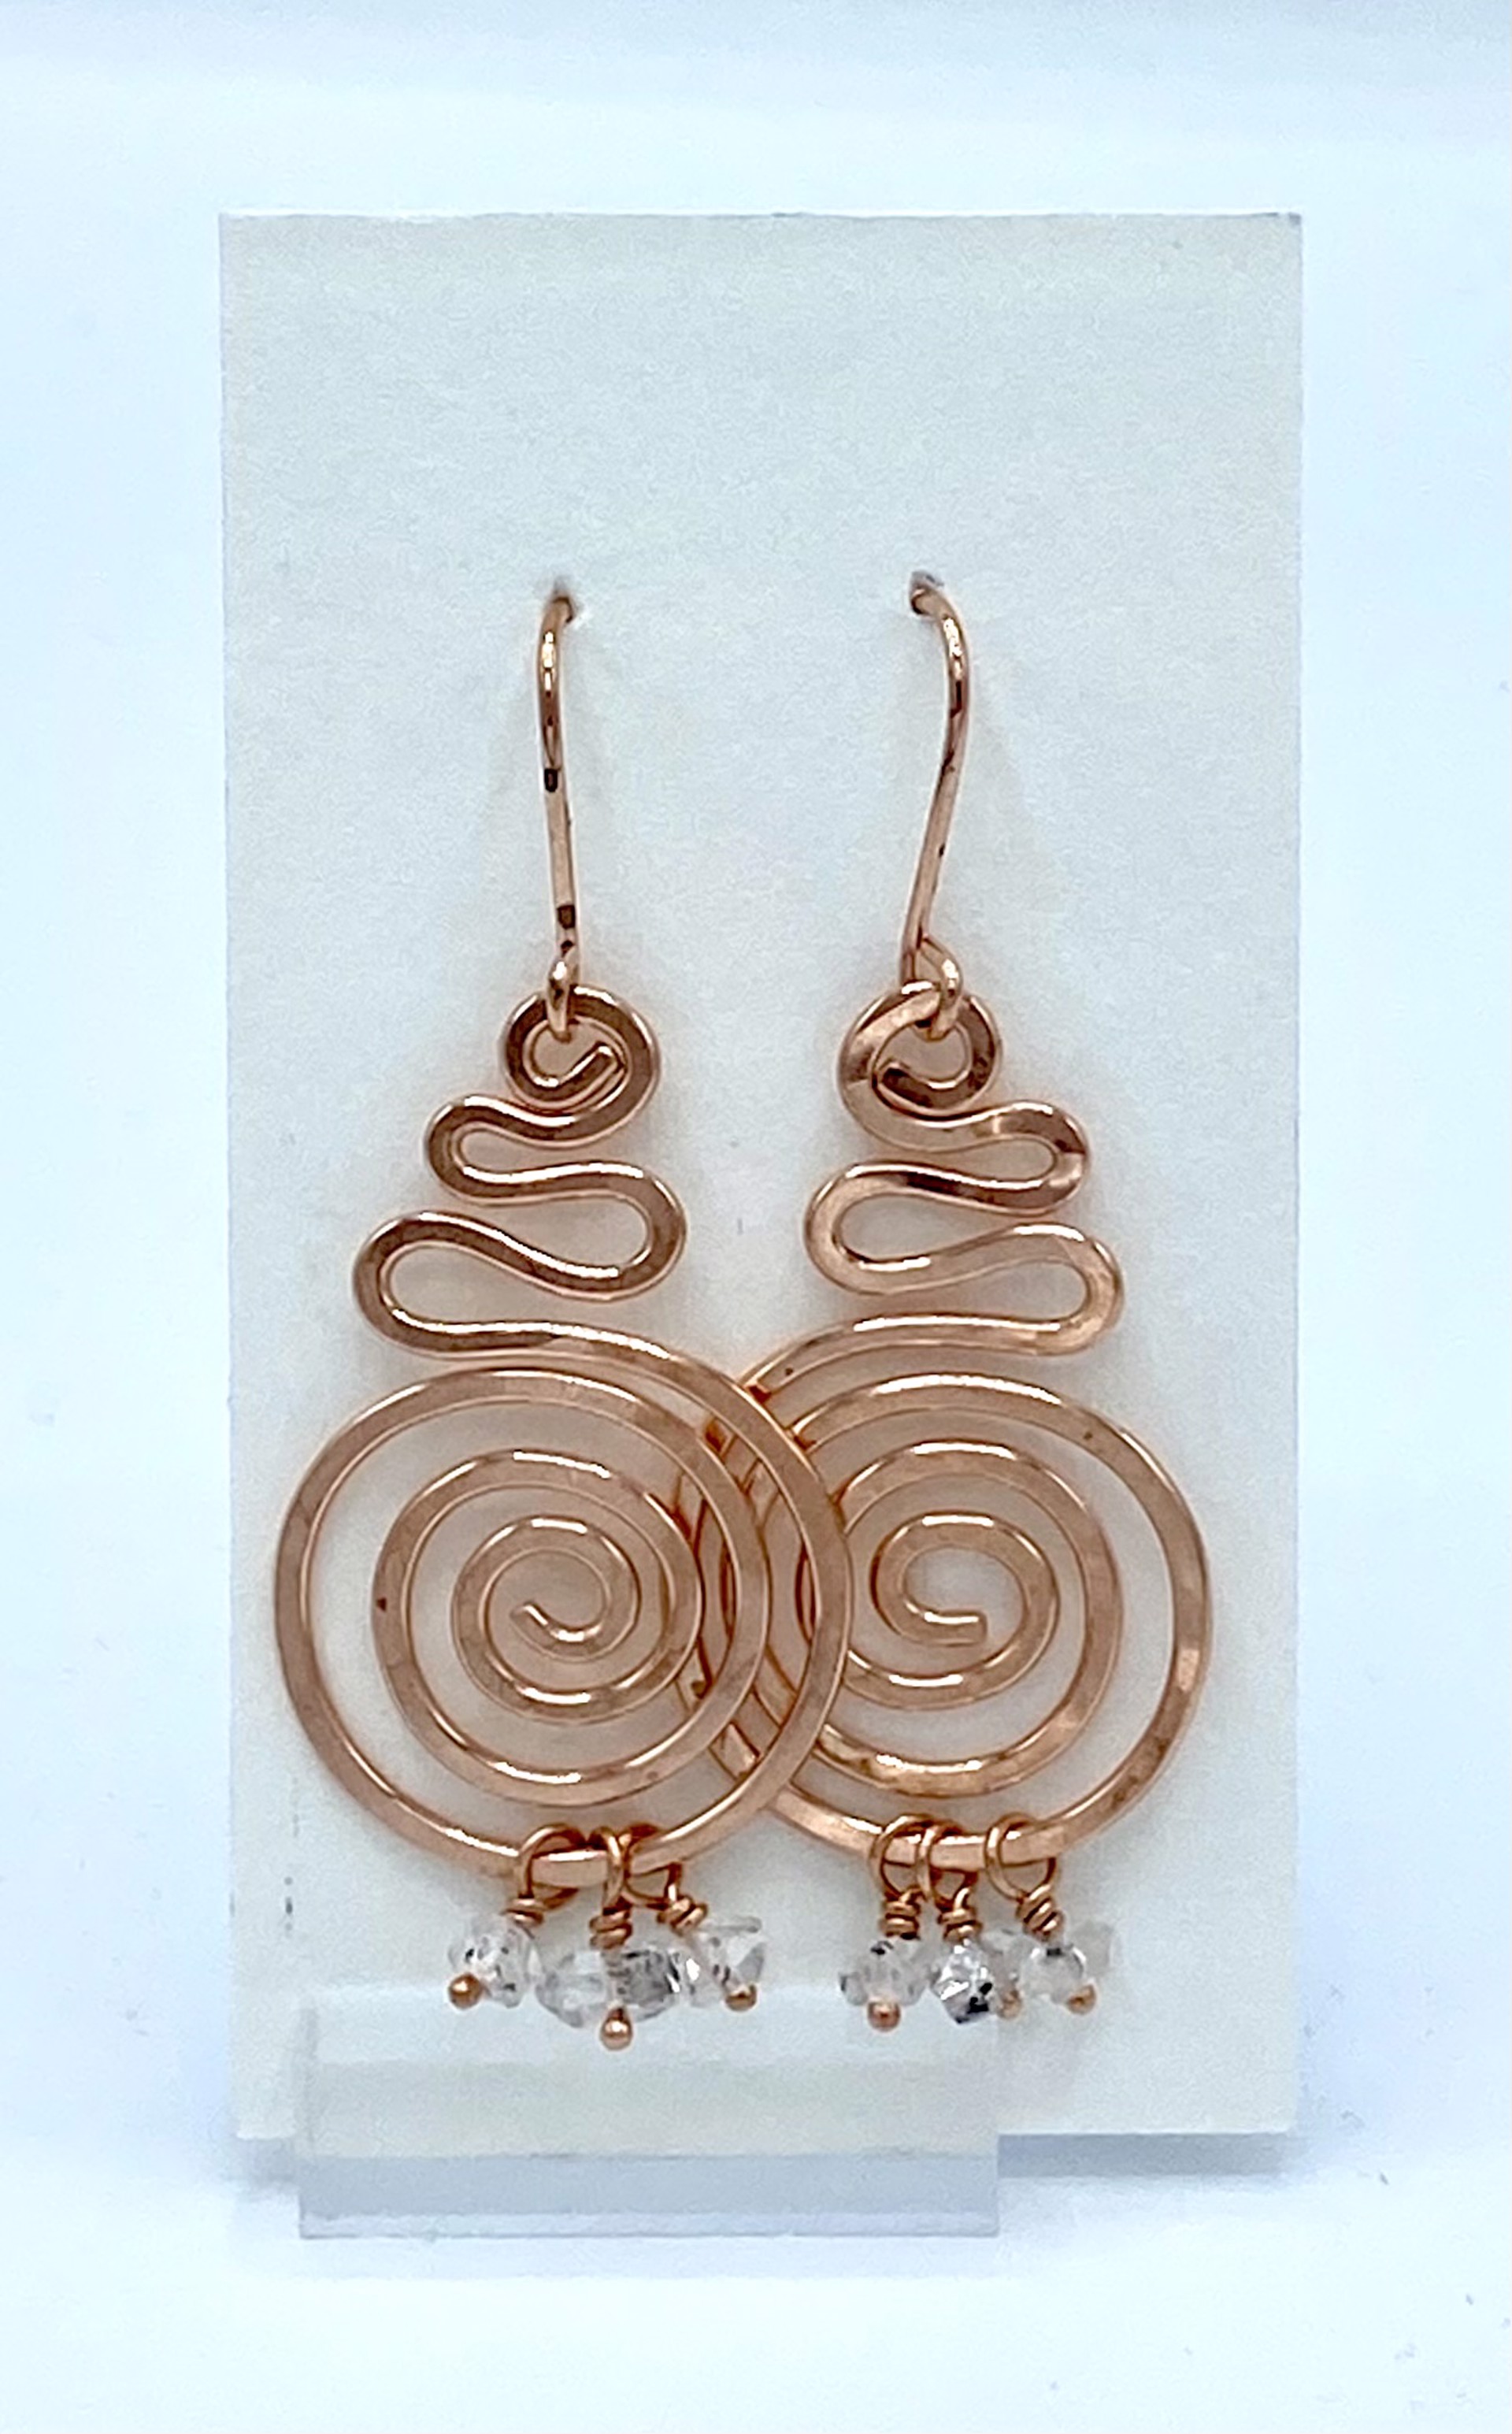 XL Copper Spiral with Herkimer Diamonds Earrings by Emelie Hebert